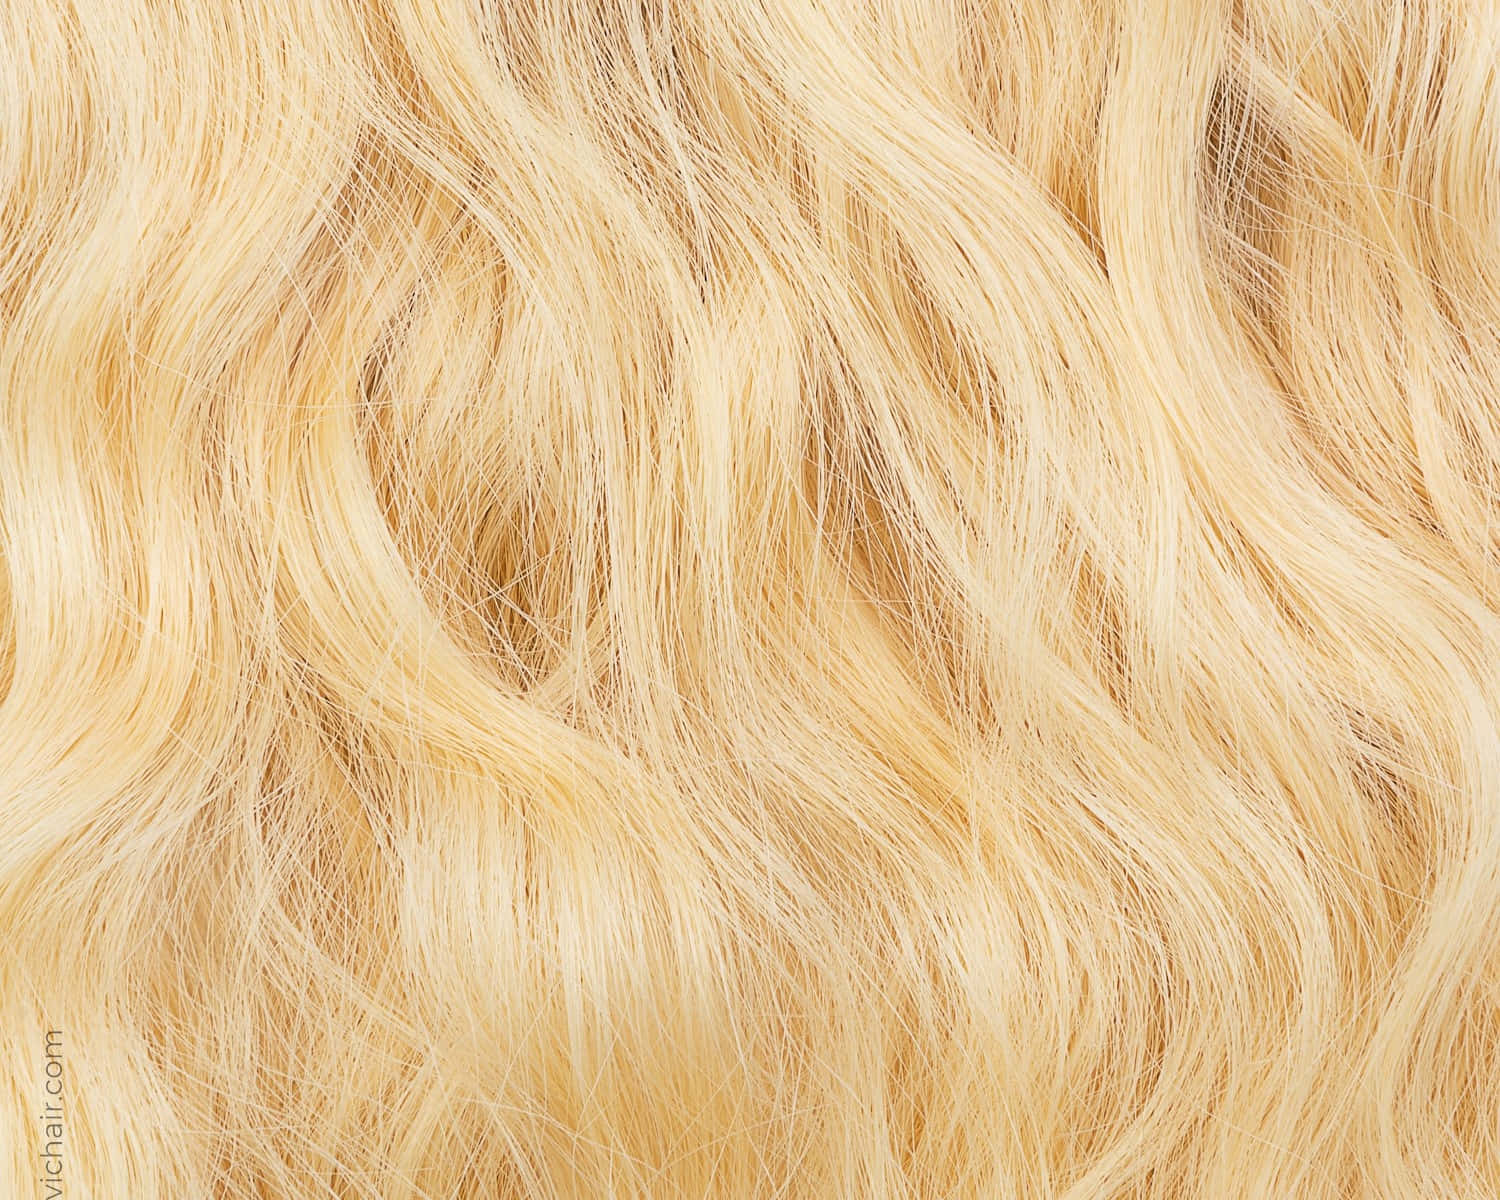 Blonde Wavy Hair Texture Wallpaper